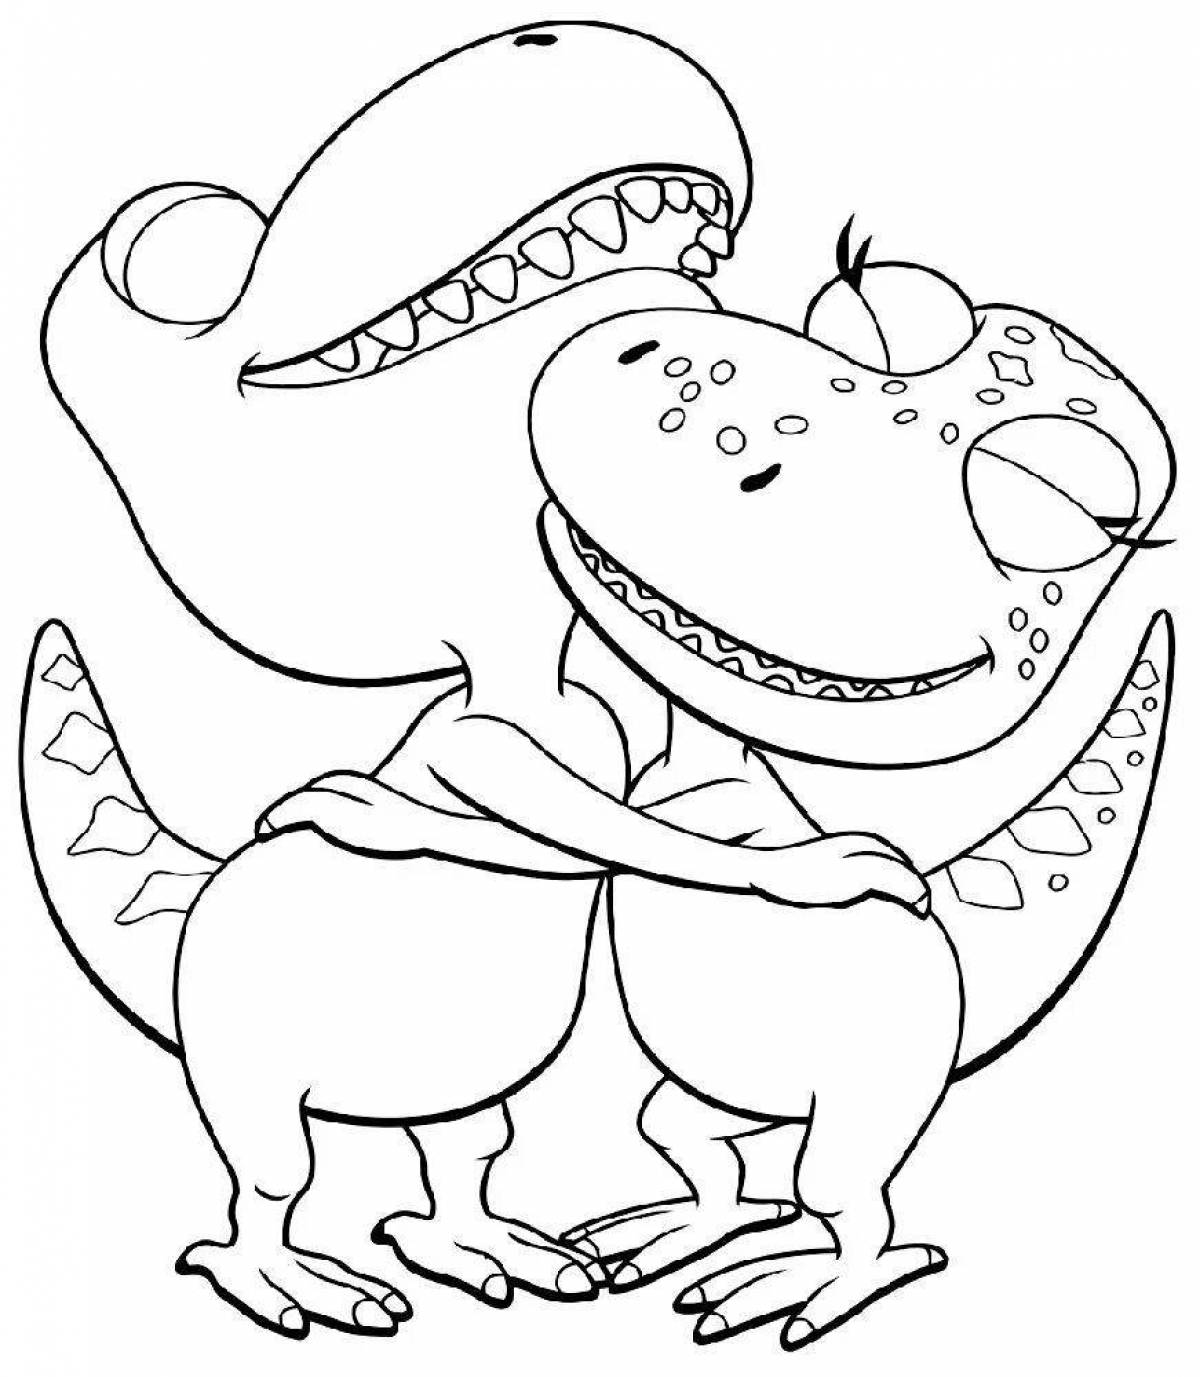 Regal Turbosaurus coloring page